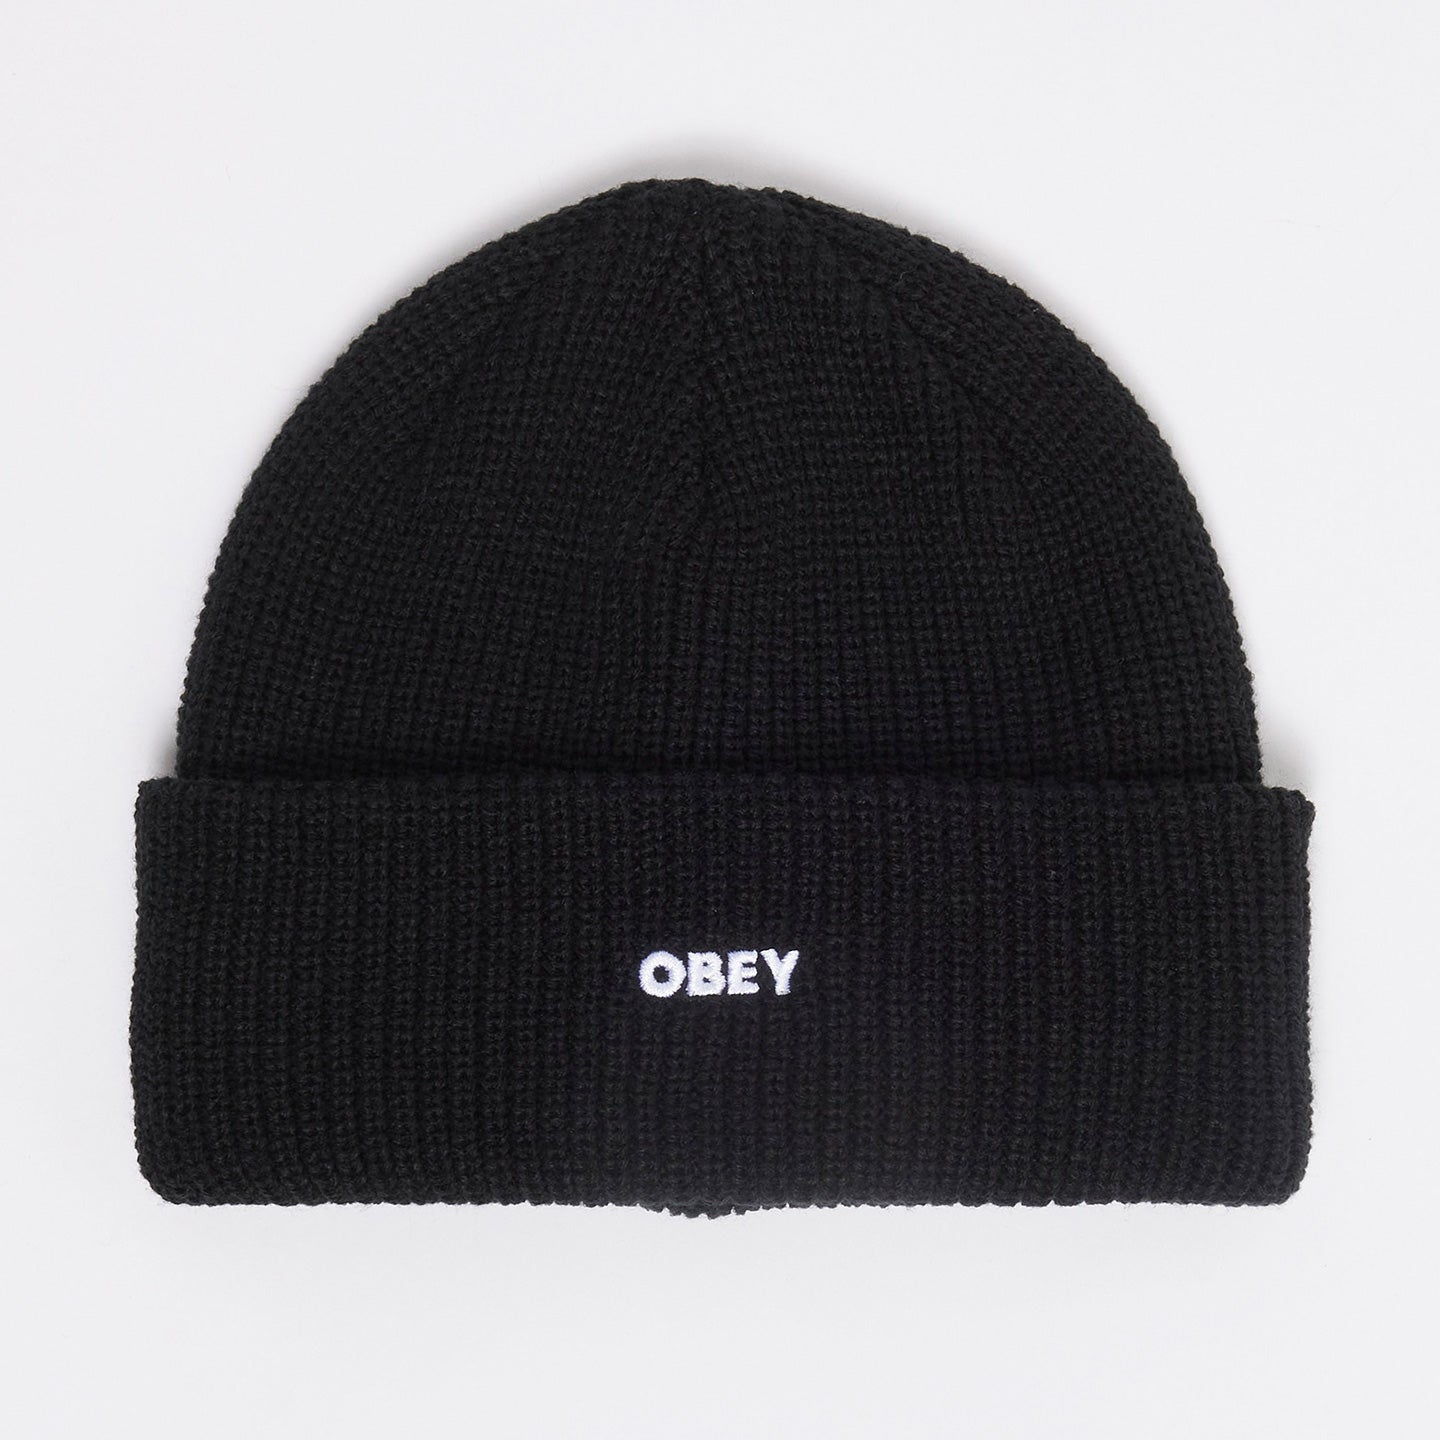 OBEY ビーニー ニット帽 - 帽子